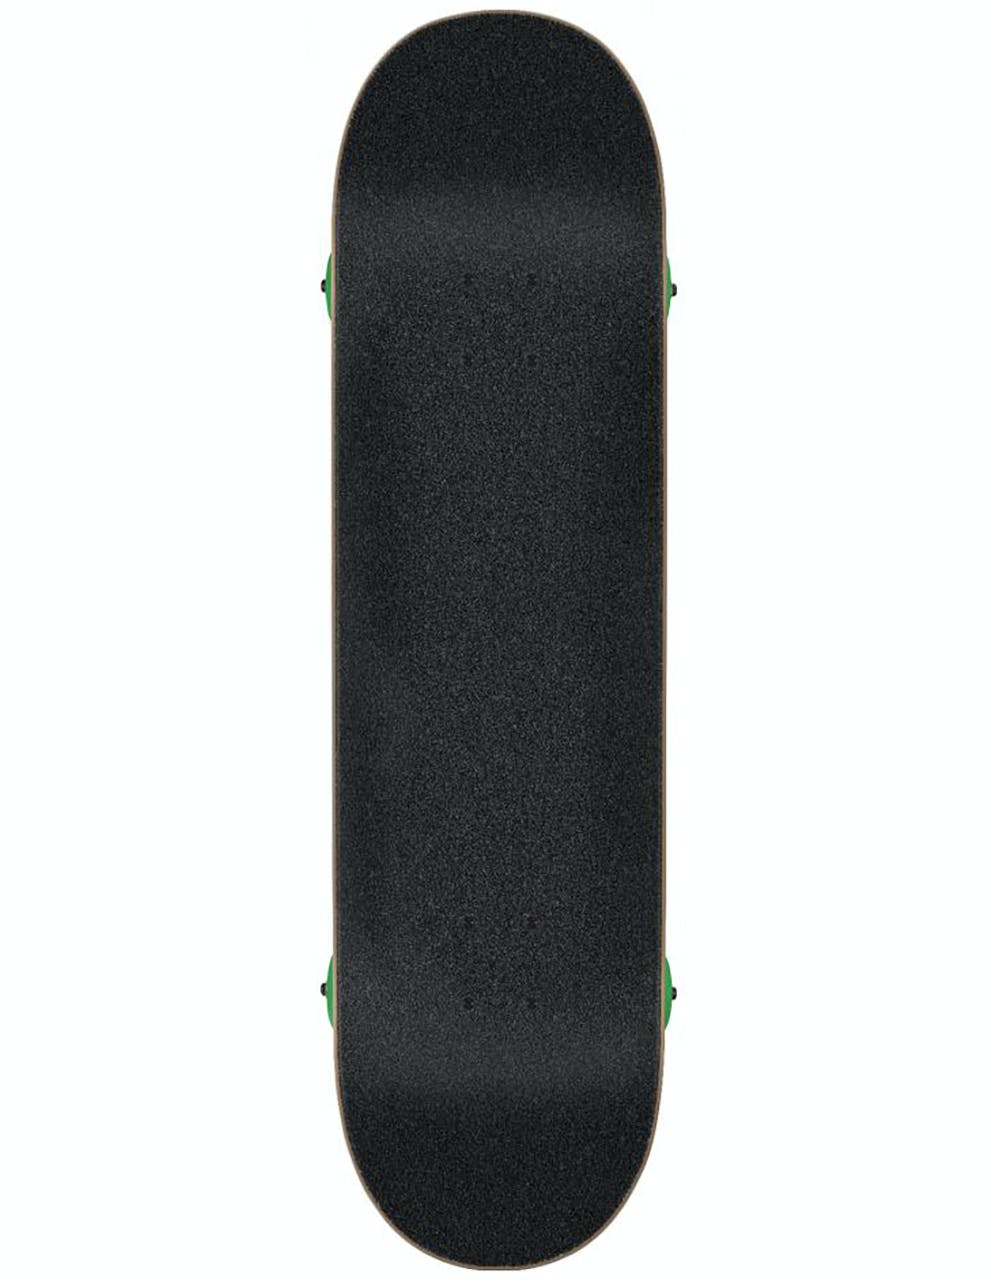 Santa Cruz Aura Hand Complete Skateboard - 7.5"